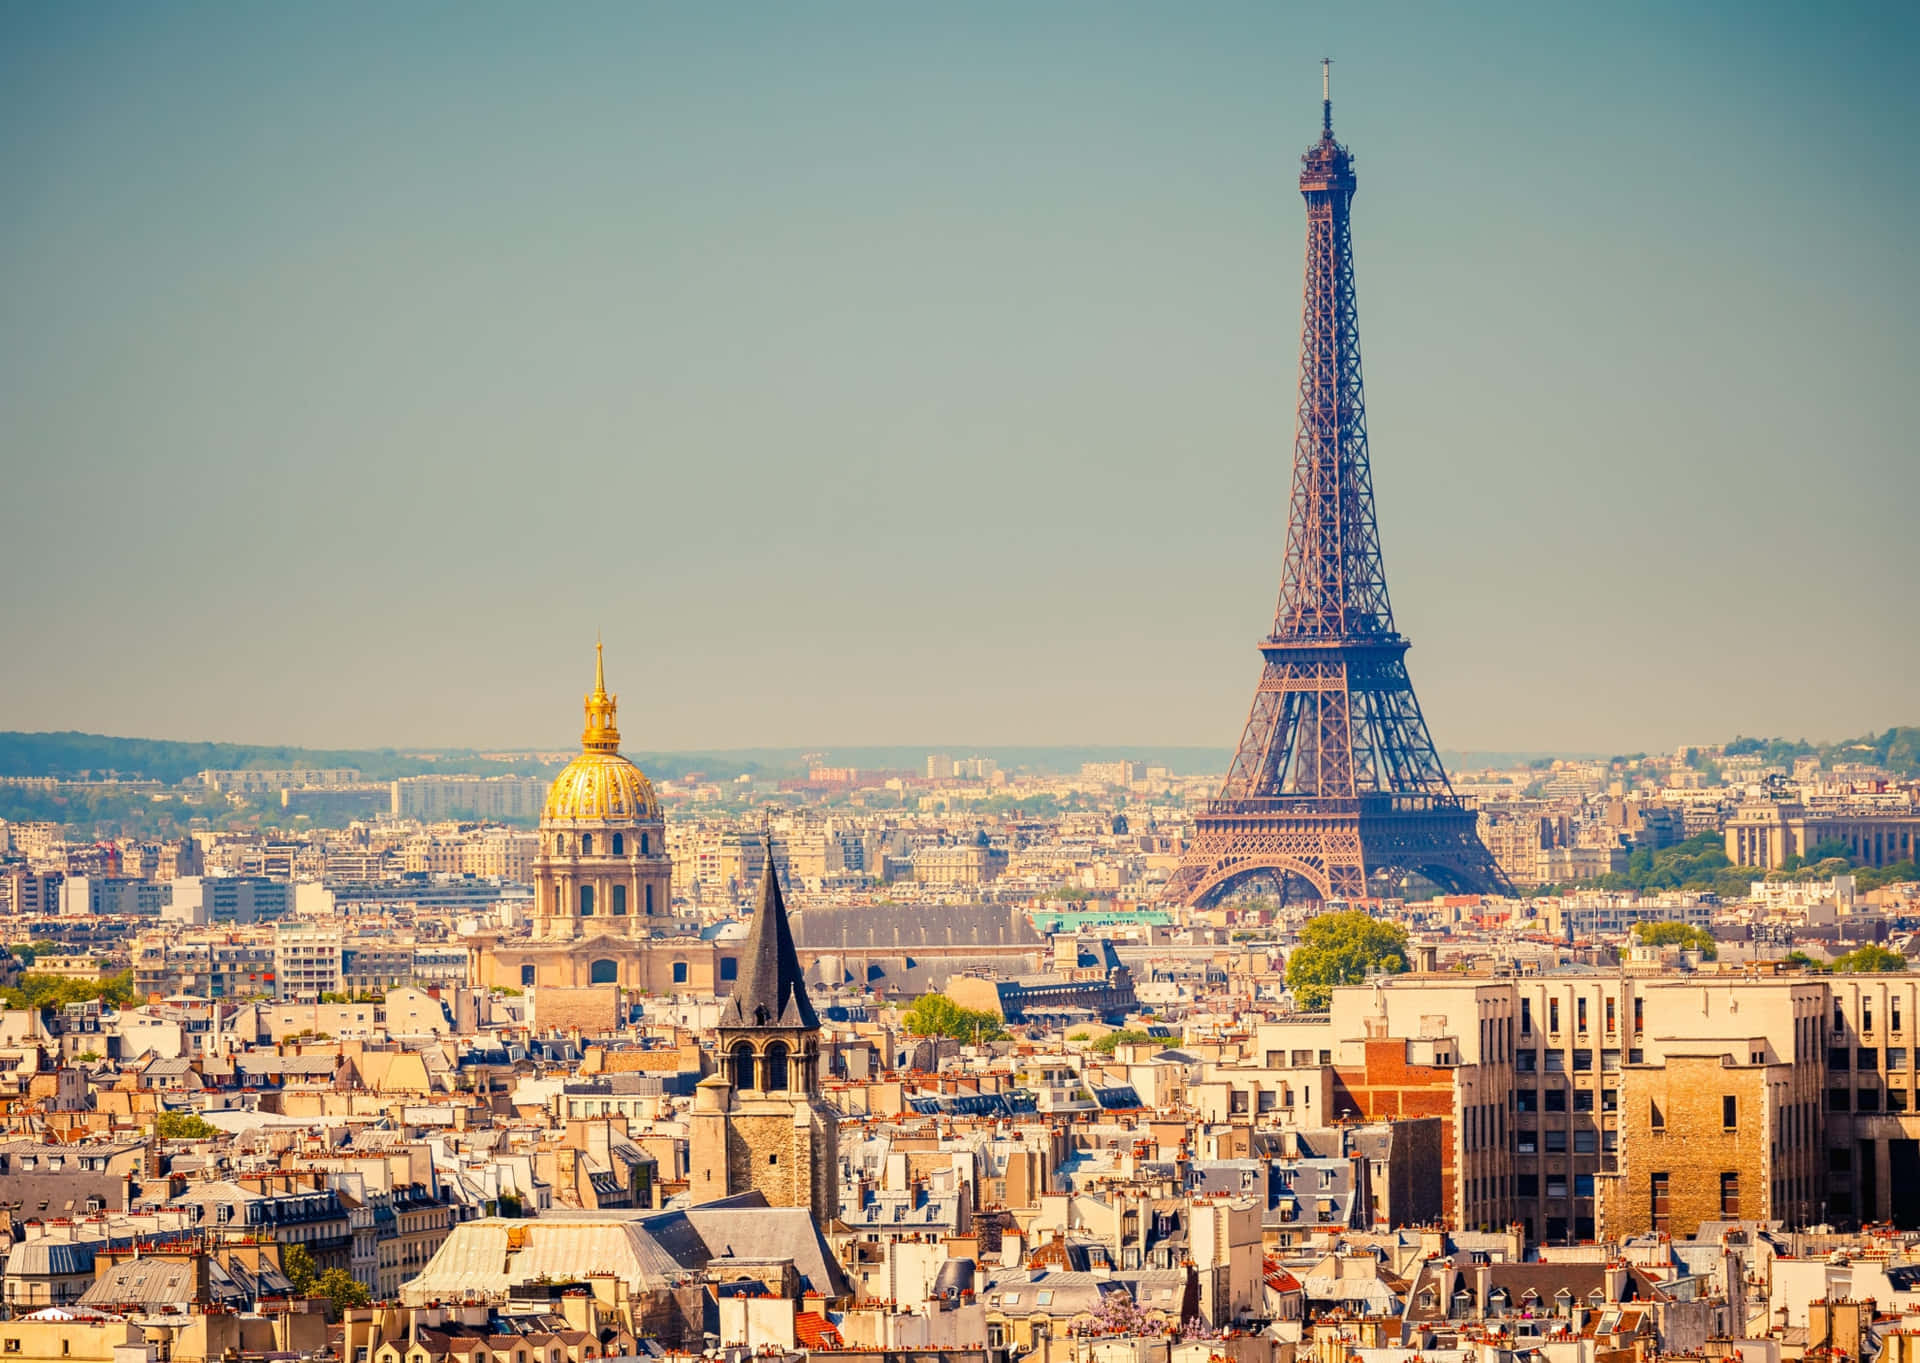 Paris, France - Eiffel Tower And Cityscape